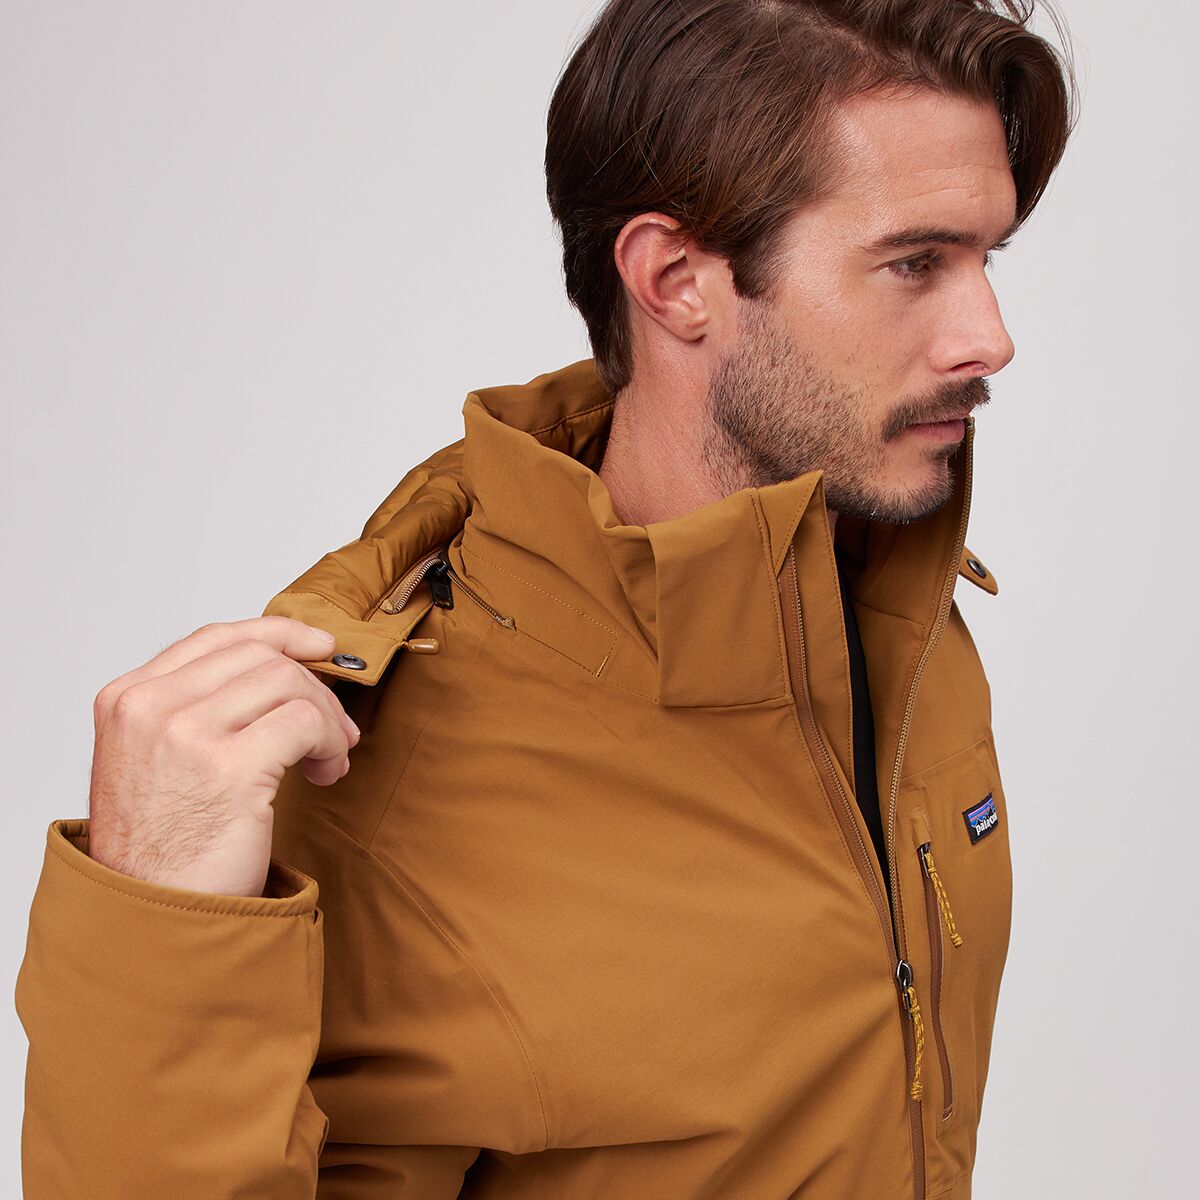 Blinke Min skak Patagonia Quandary Insulated Jacket - Men's - Clothing